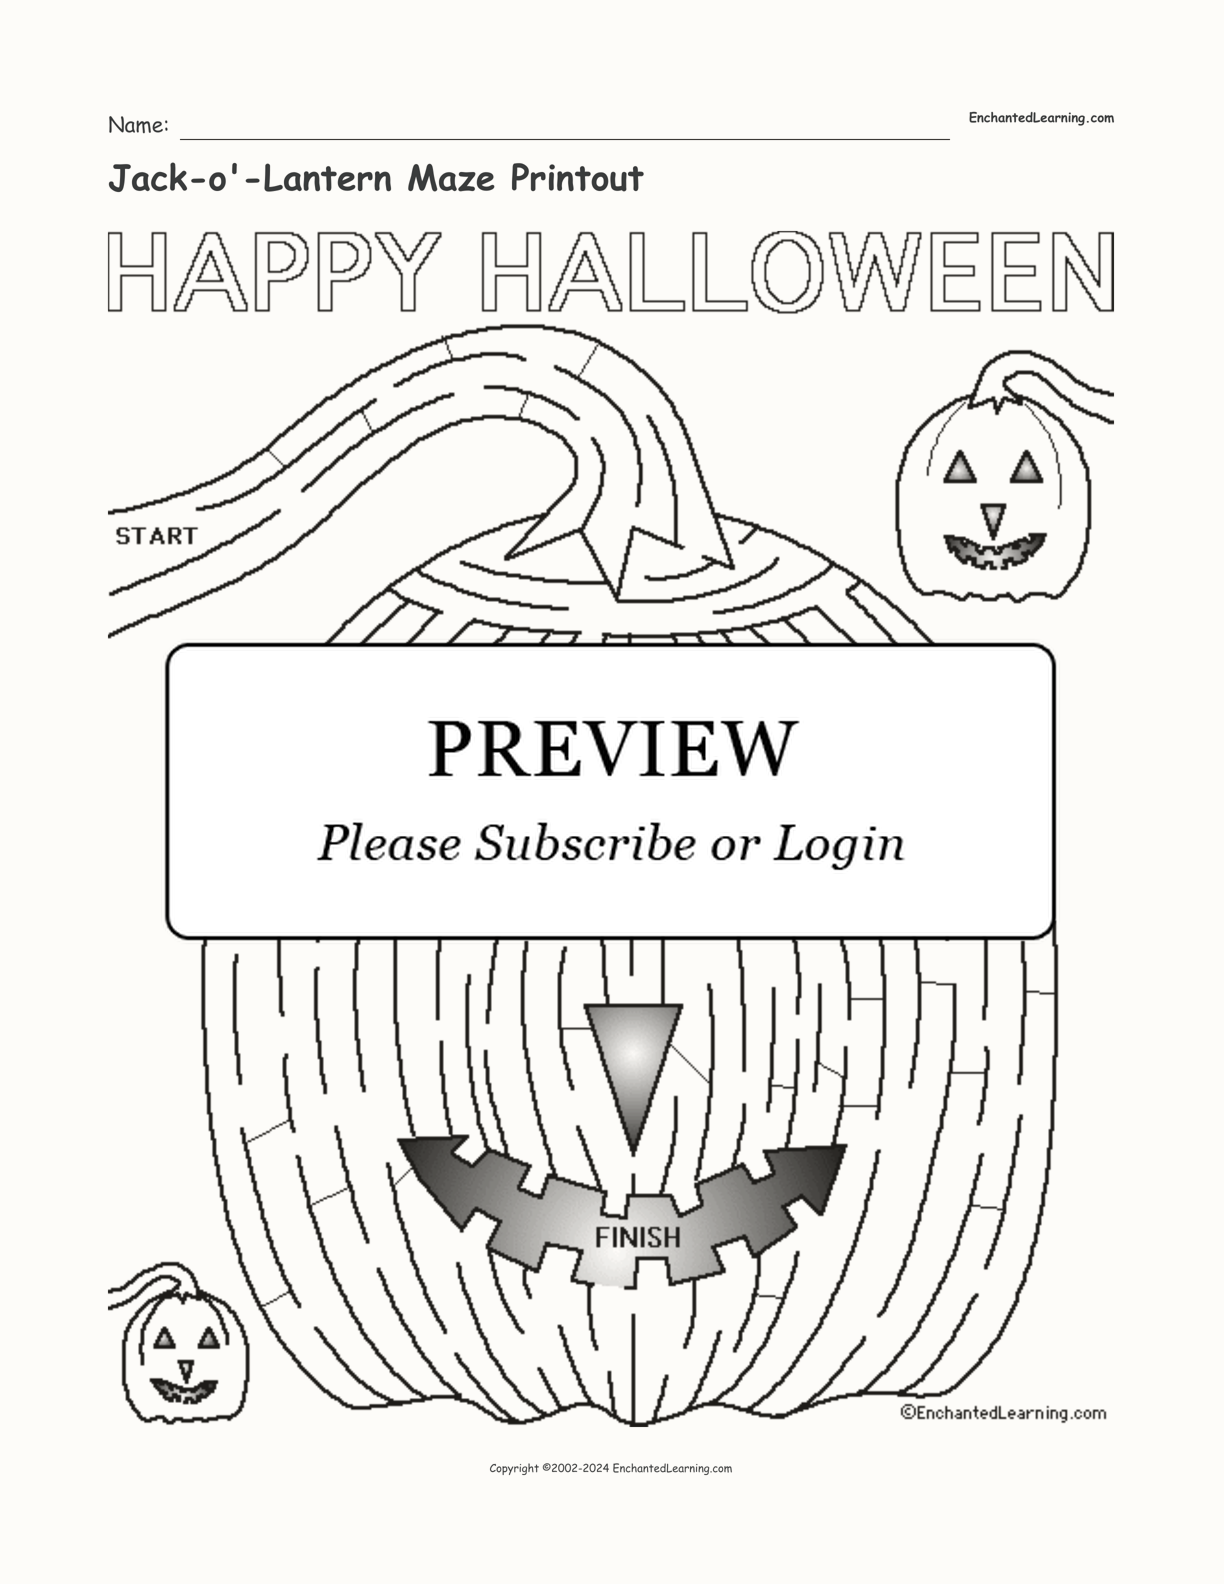 Jack-o'-Lantern Maze Printout interactive worksheet page 1